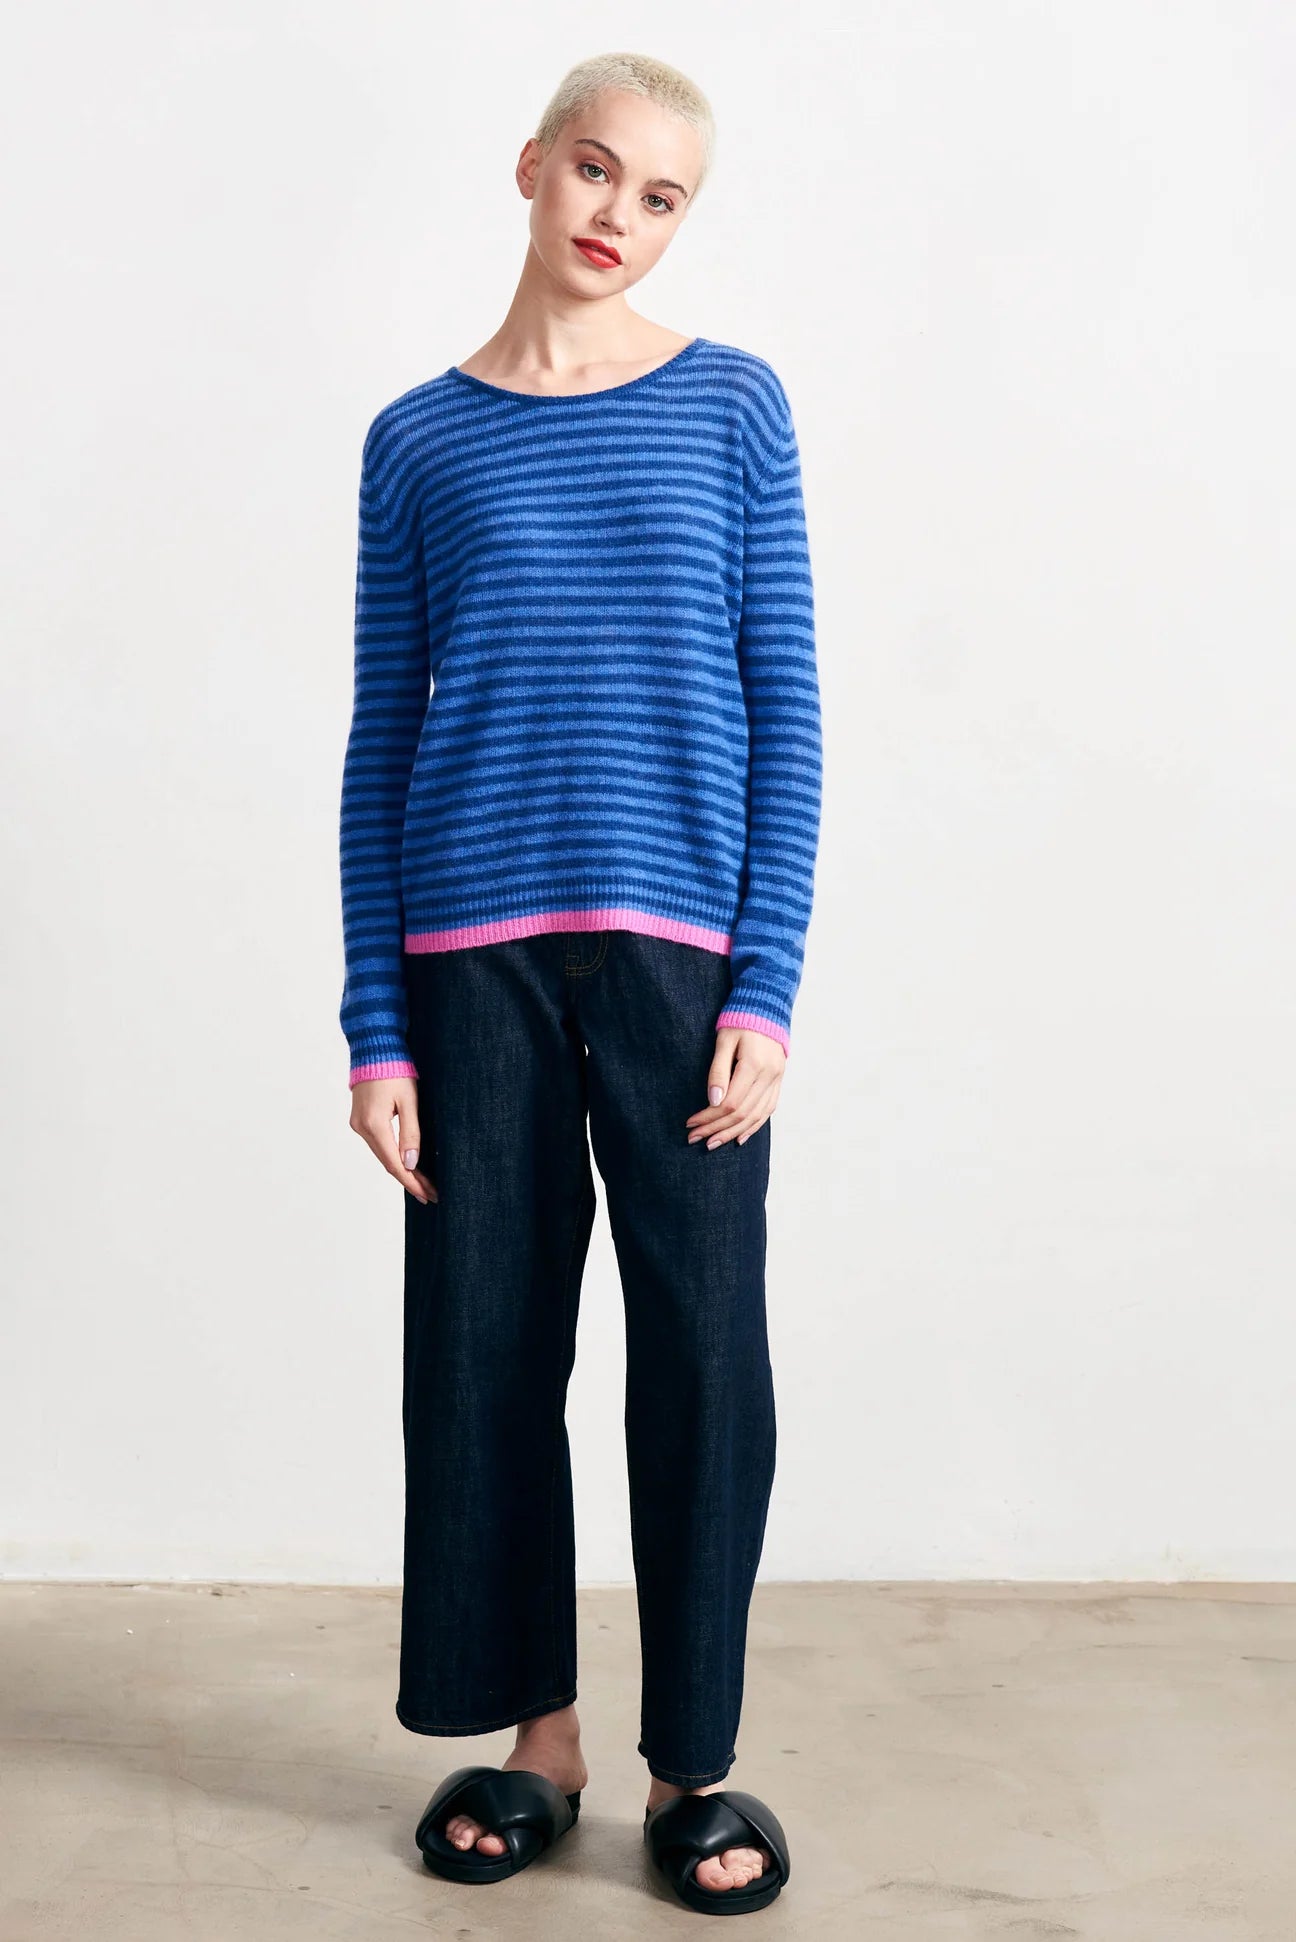 Jumper 1 2 3 4 Little Stripe Cashmere Sweater in Denim/Periwinkle - Estilo Boutique